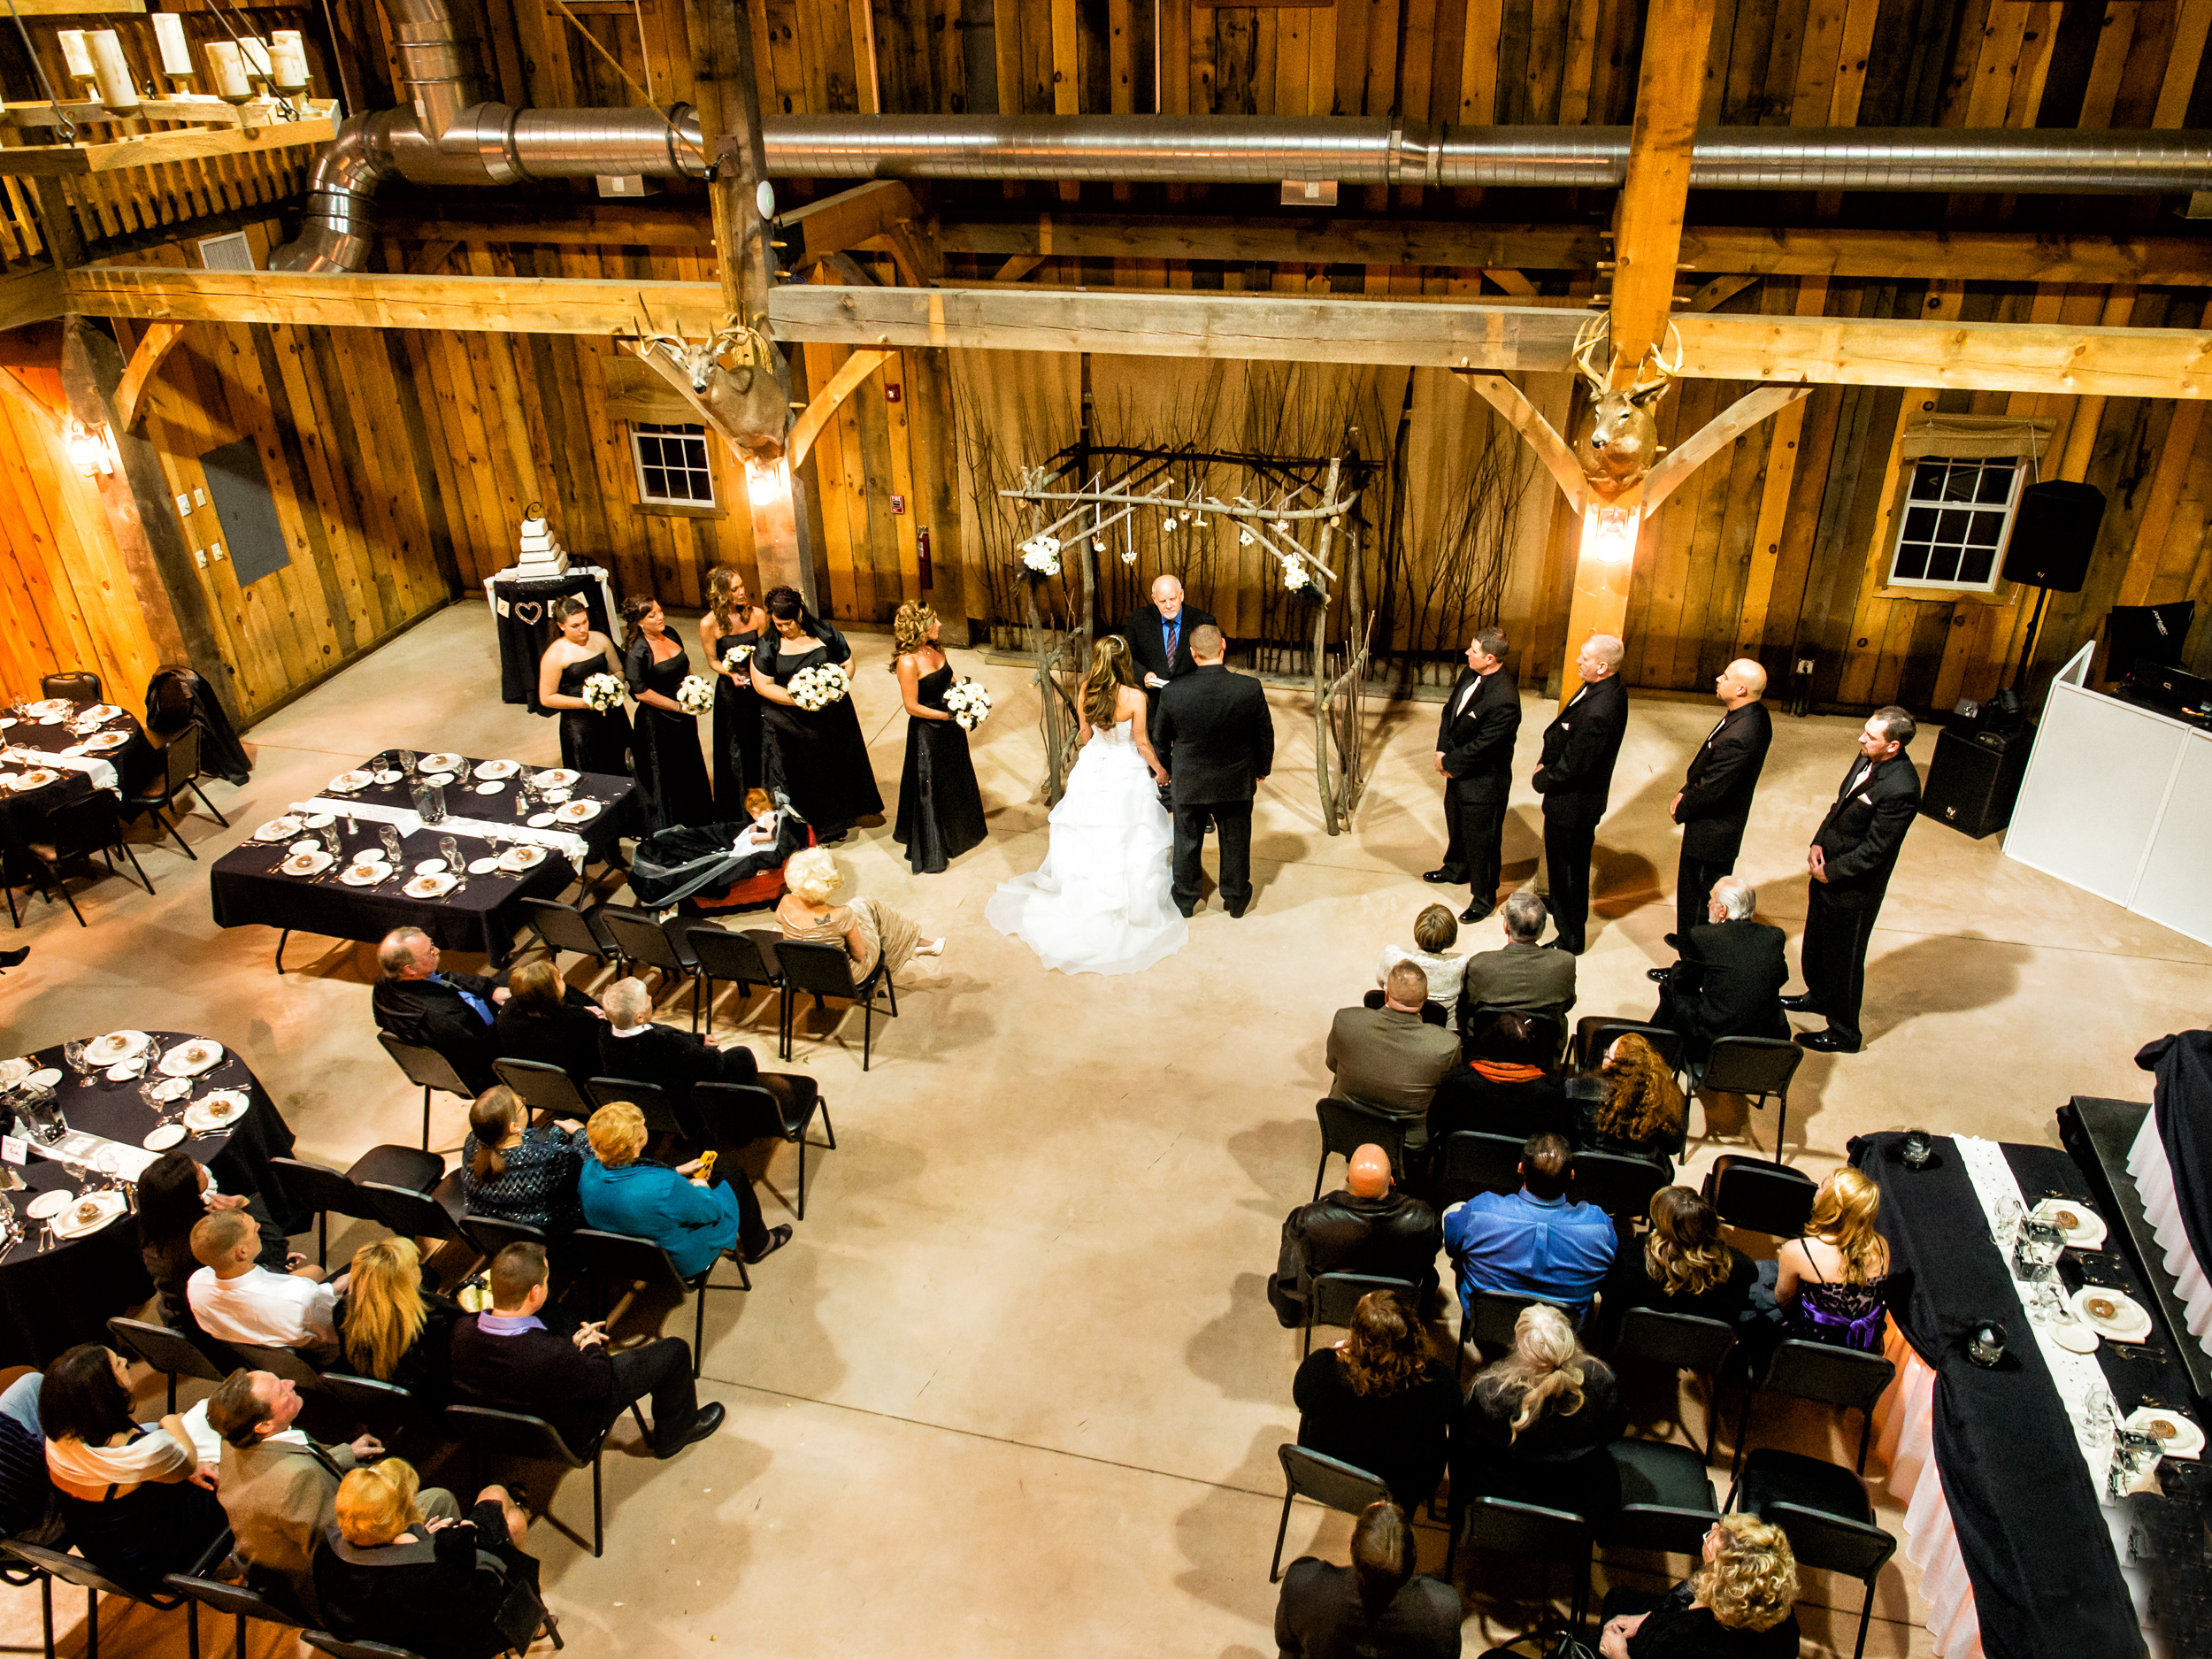 County Line Orchard Wedding Venue - Northwest Indiana Wedding Photographer Region Weddings